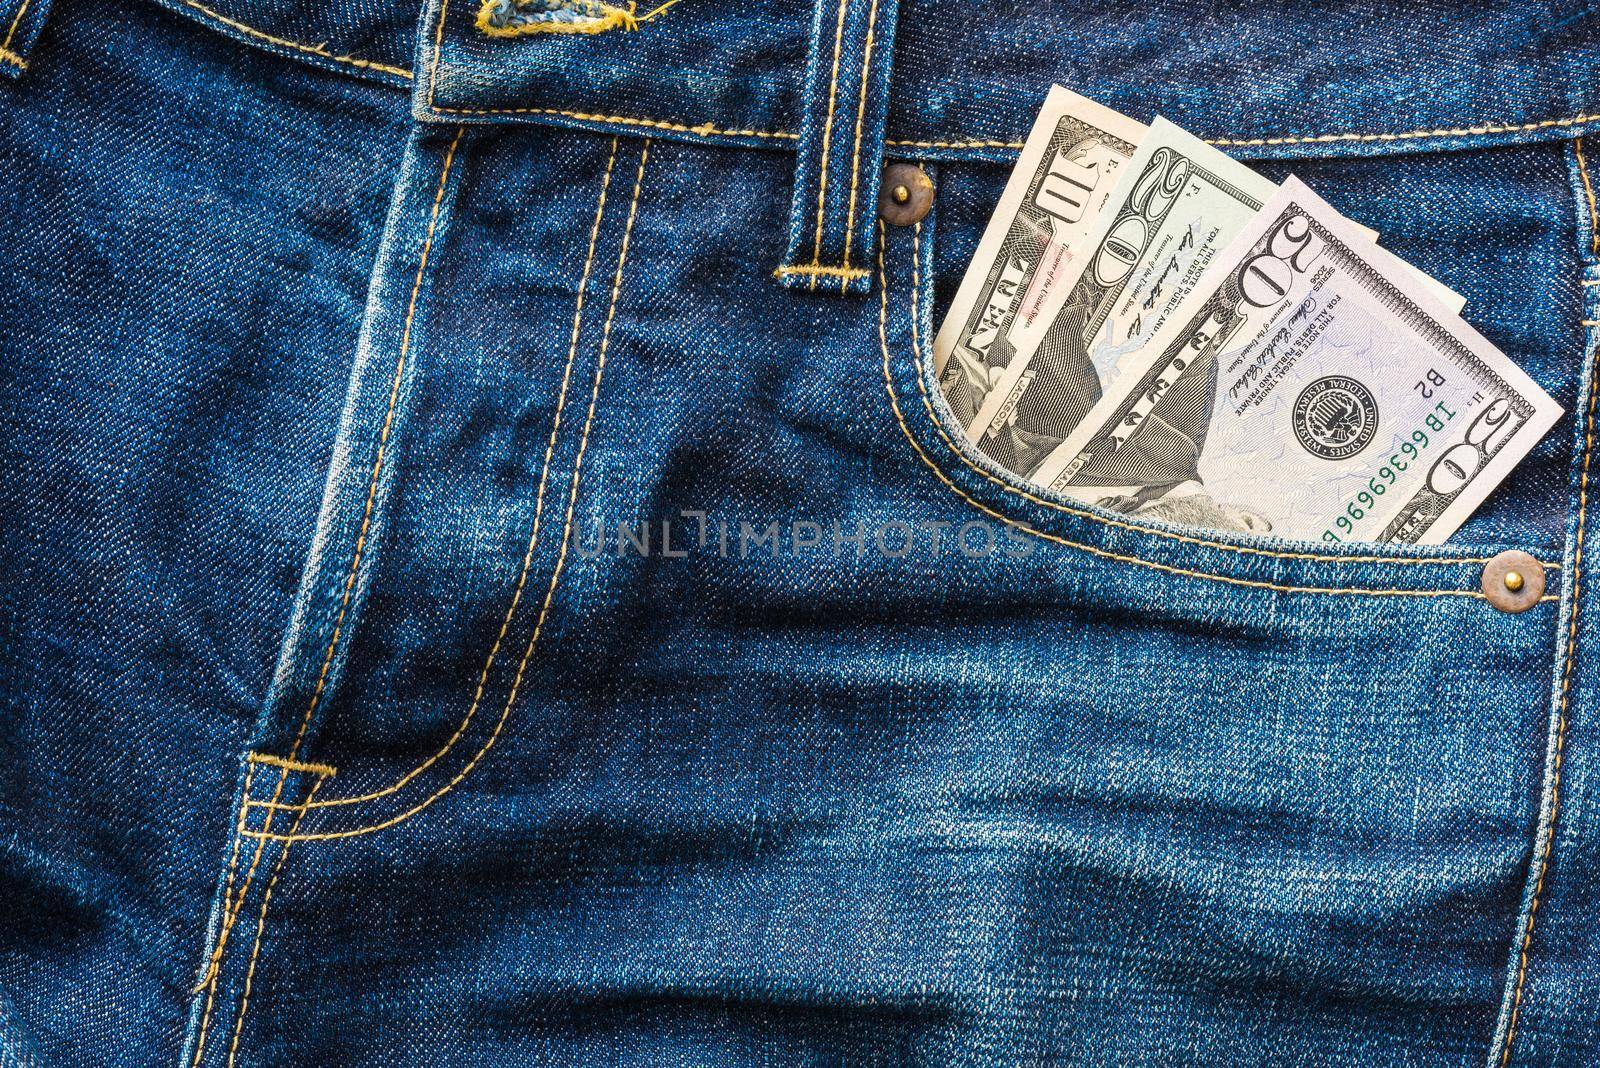 American US Dollar money in the indigo blue jeans pocket by Nuamfolio